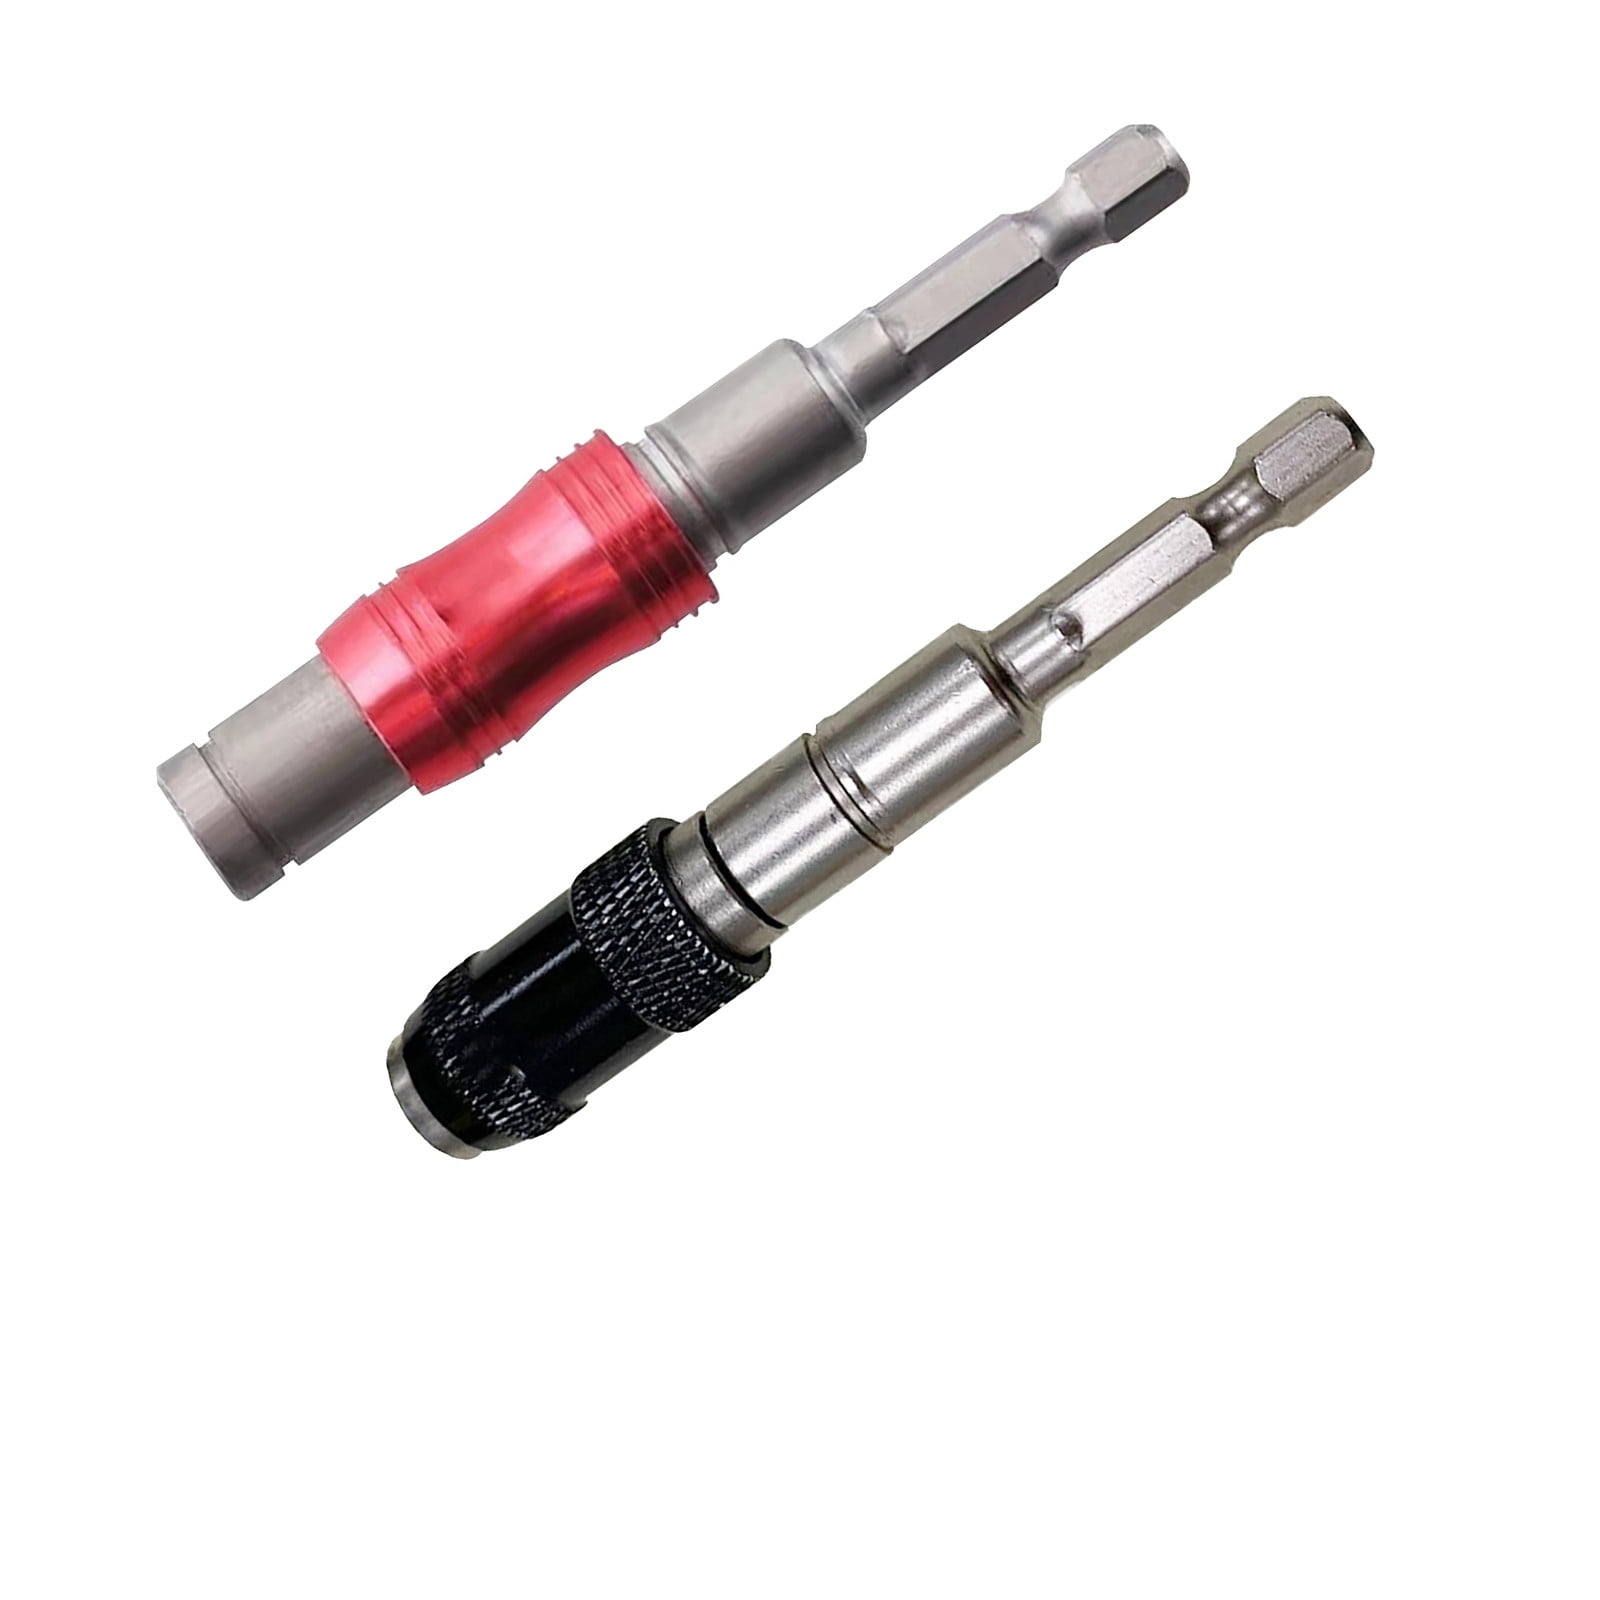 Magnetic Screw Drill Tip Change Locking Bit Holder Spring Quick Release